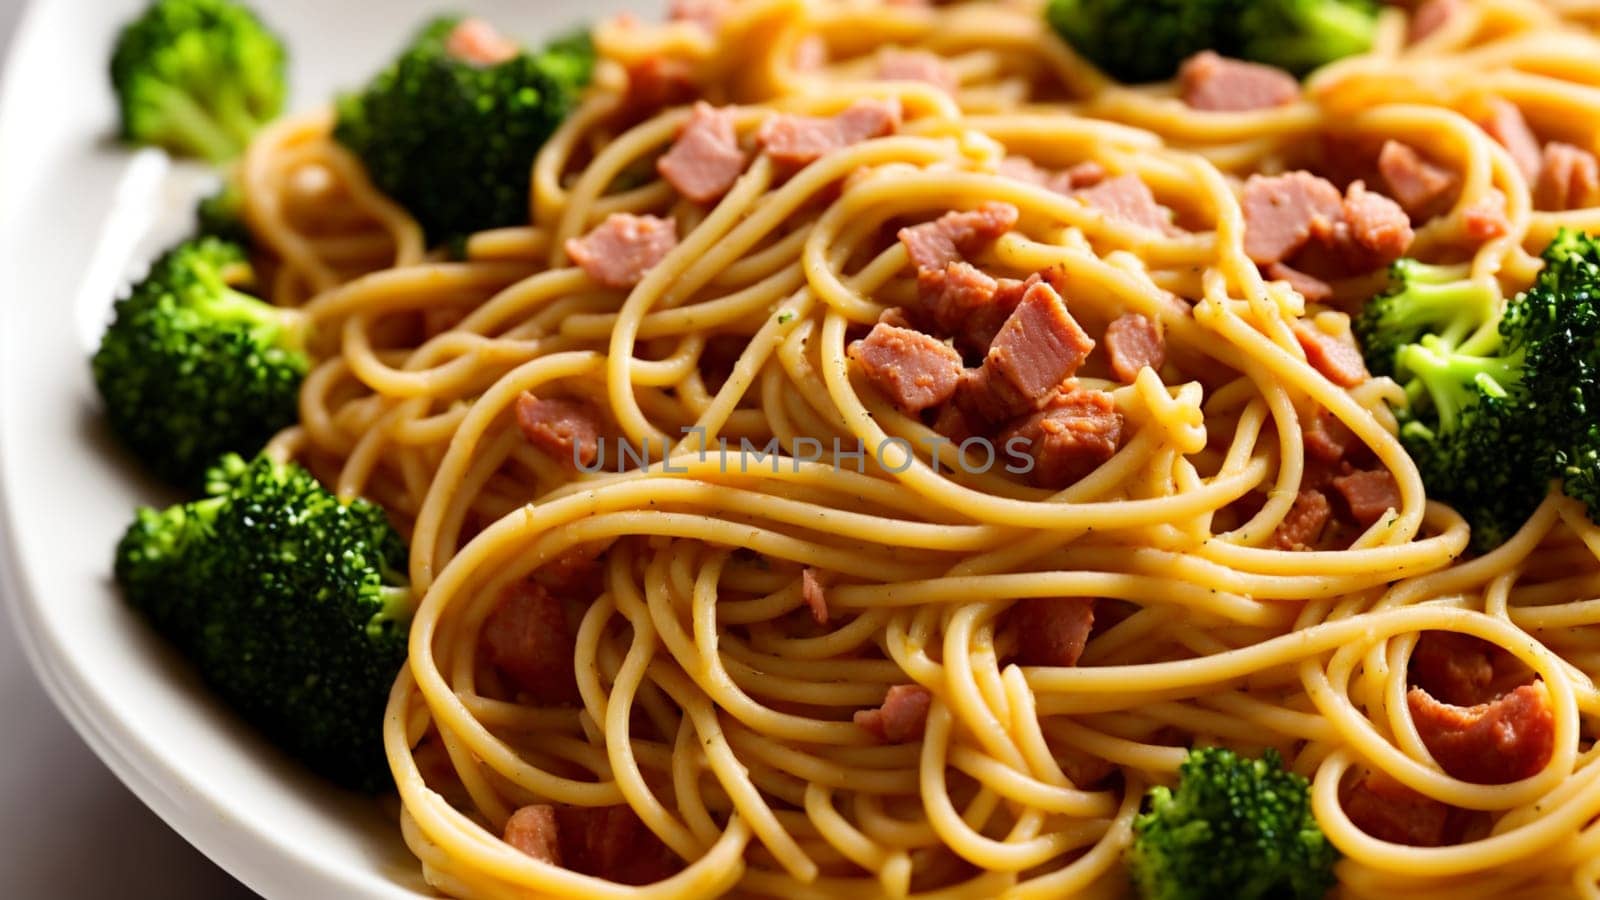 Appetizing spaghetti dish with broccoli, ham and tomato. by XabiDonostia